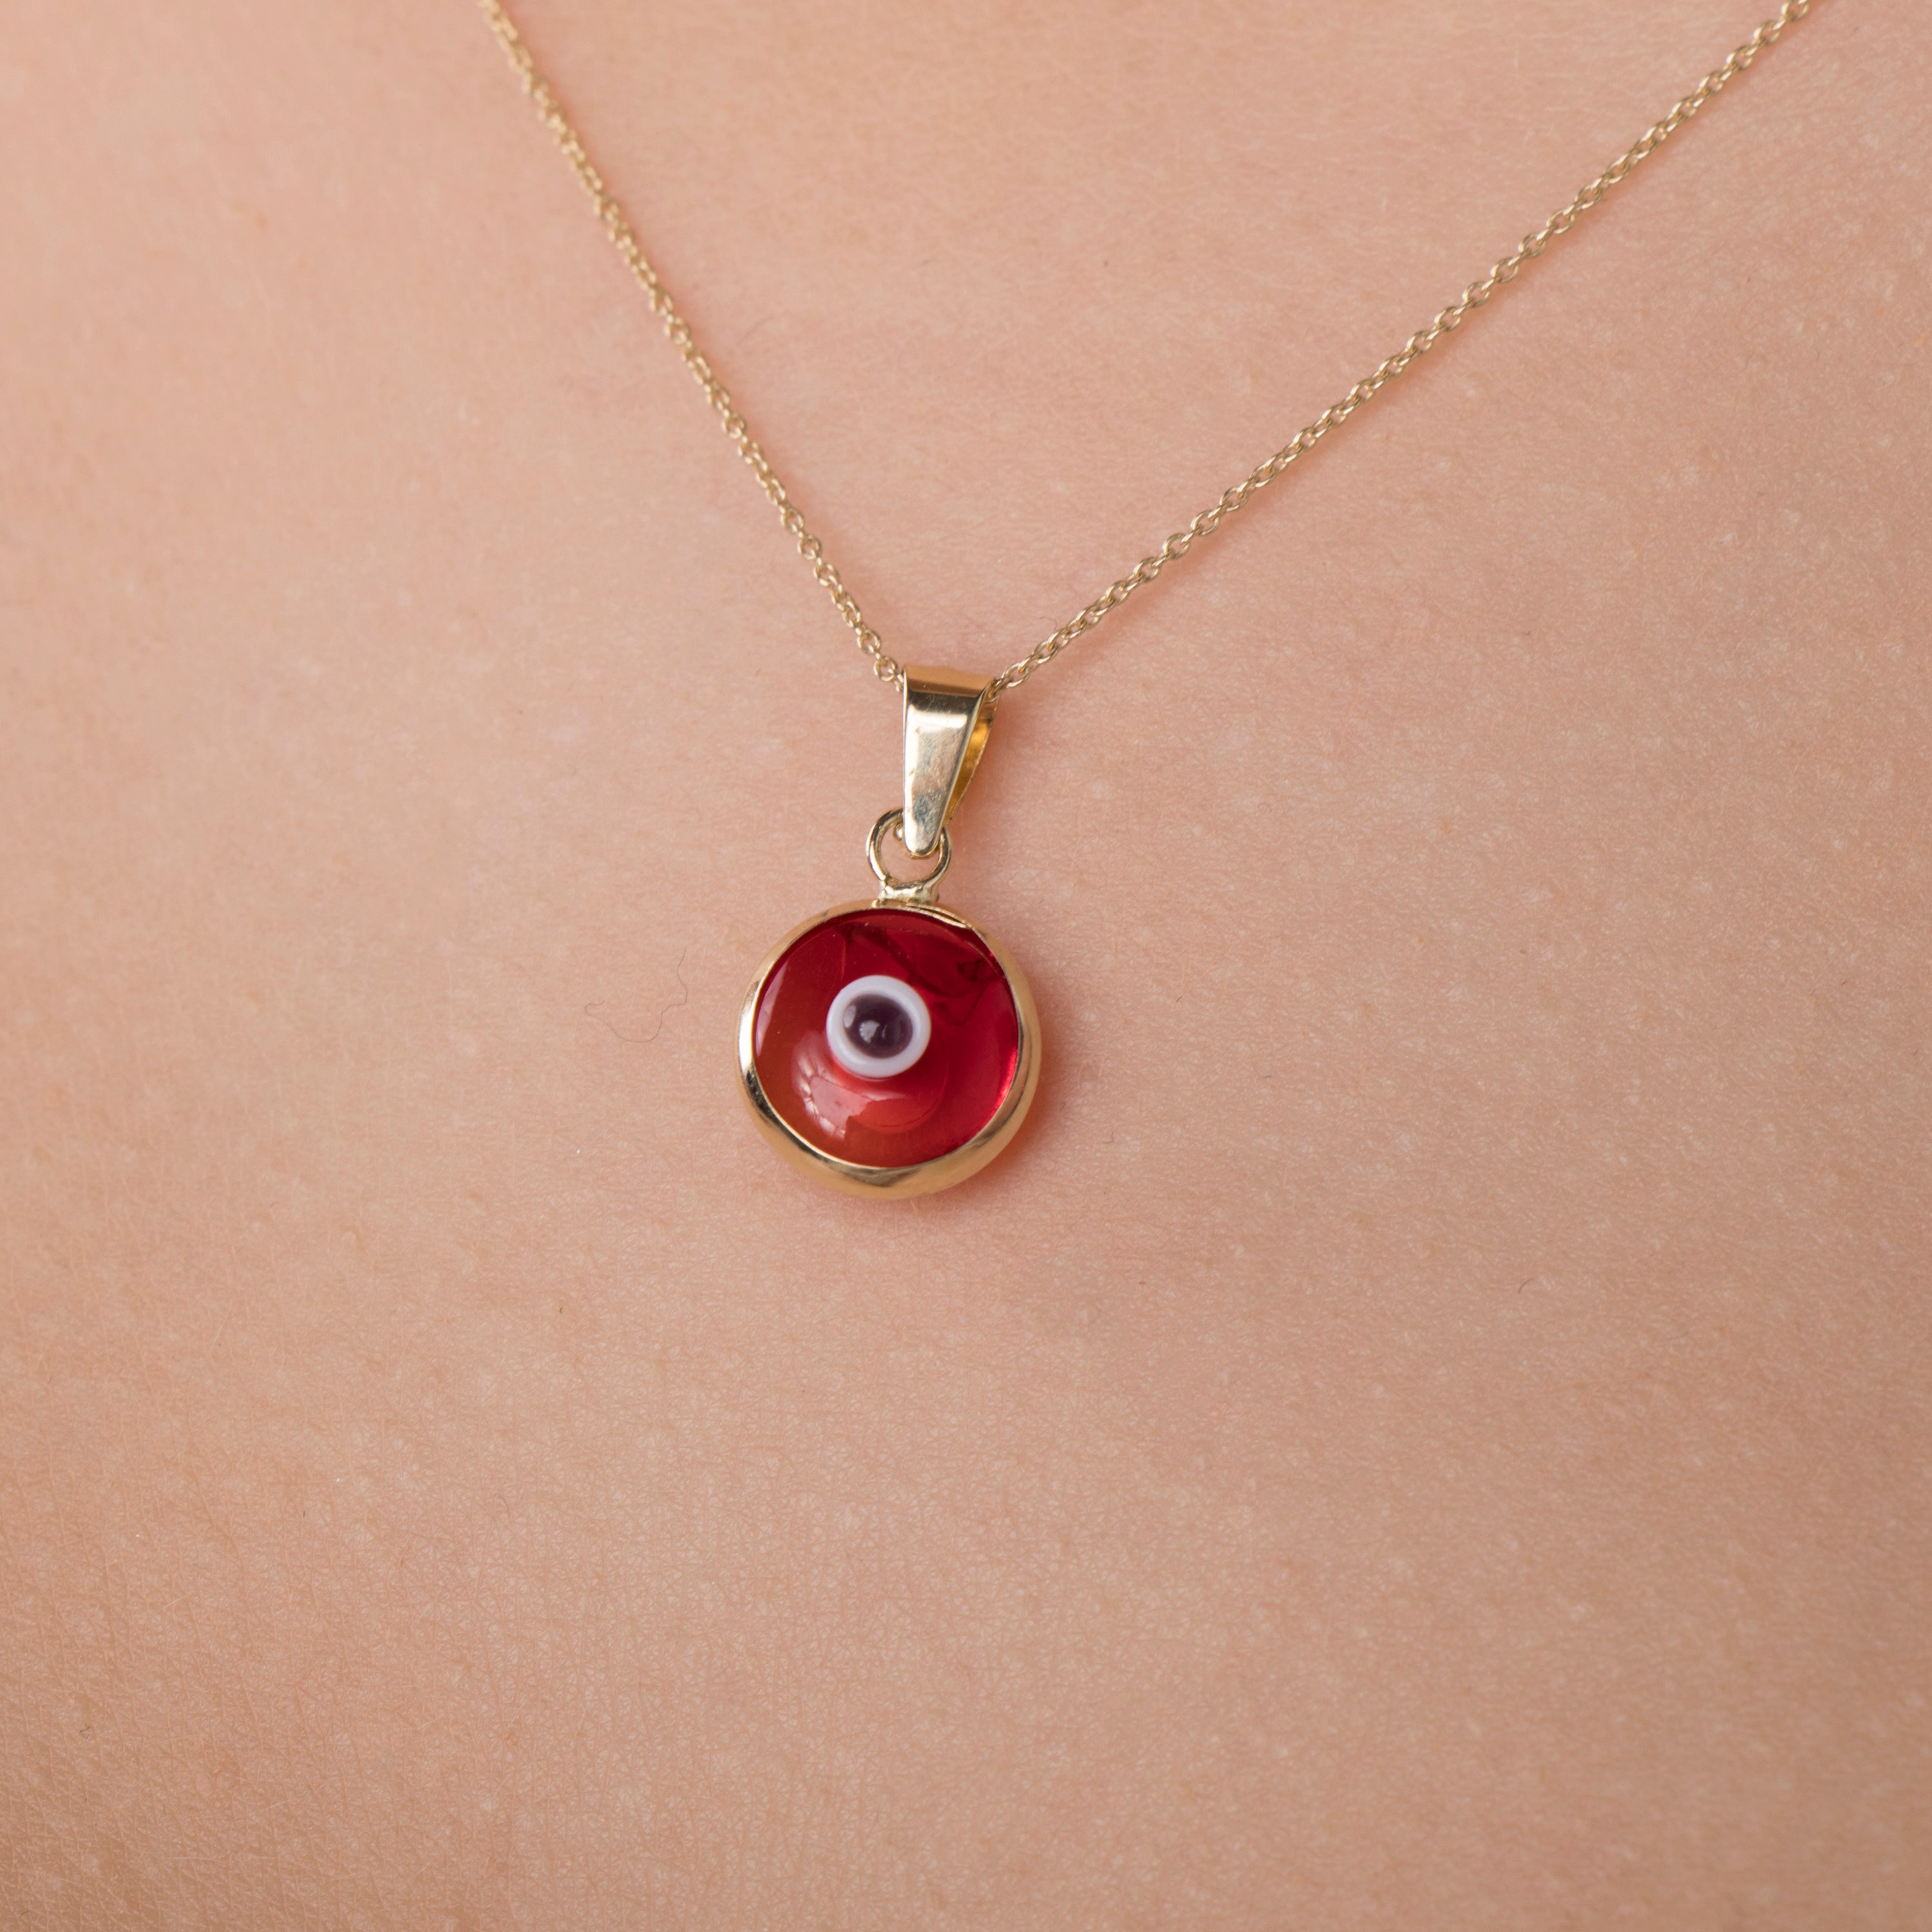 Red Evil Eye Pendant Necklace in 14K Gold